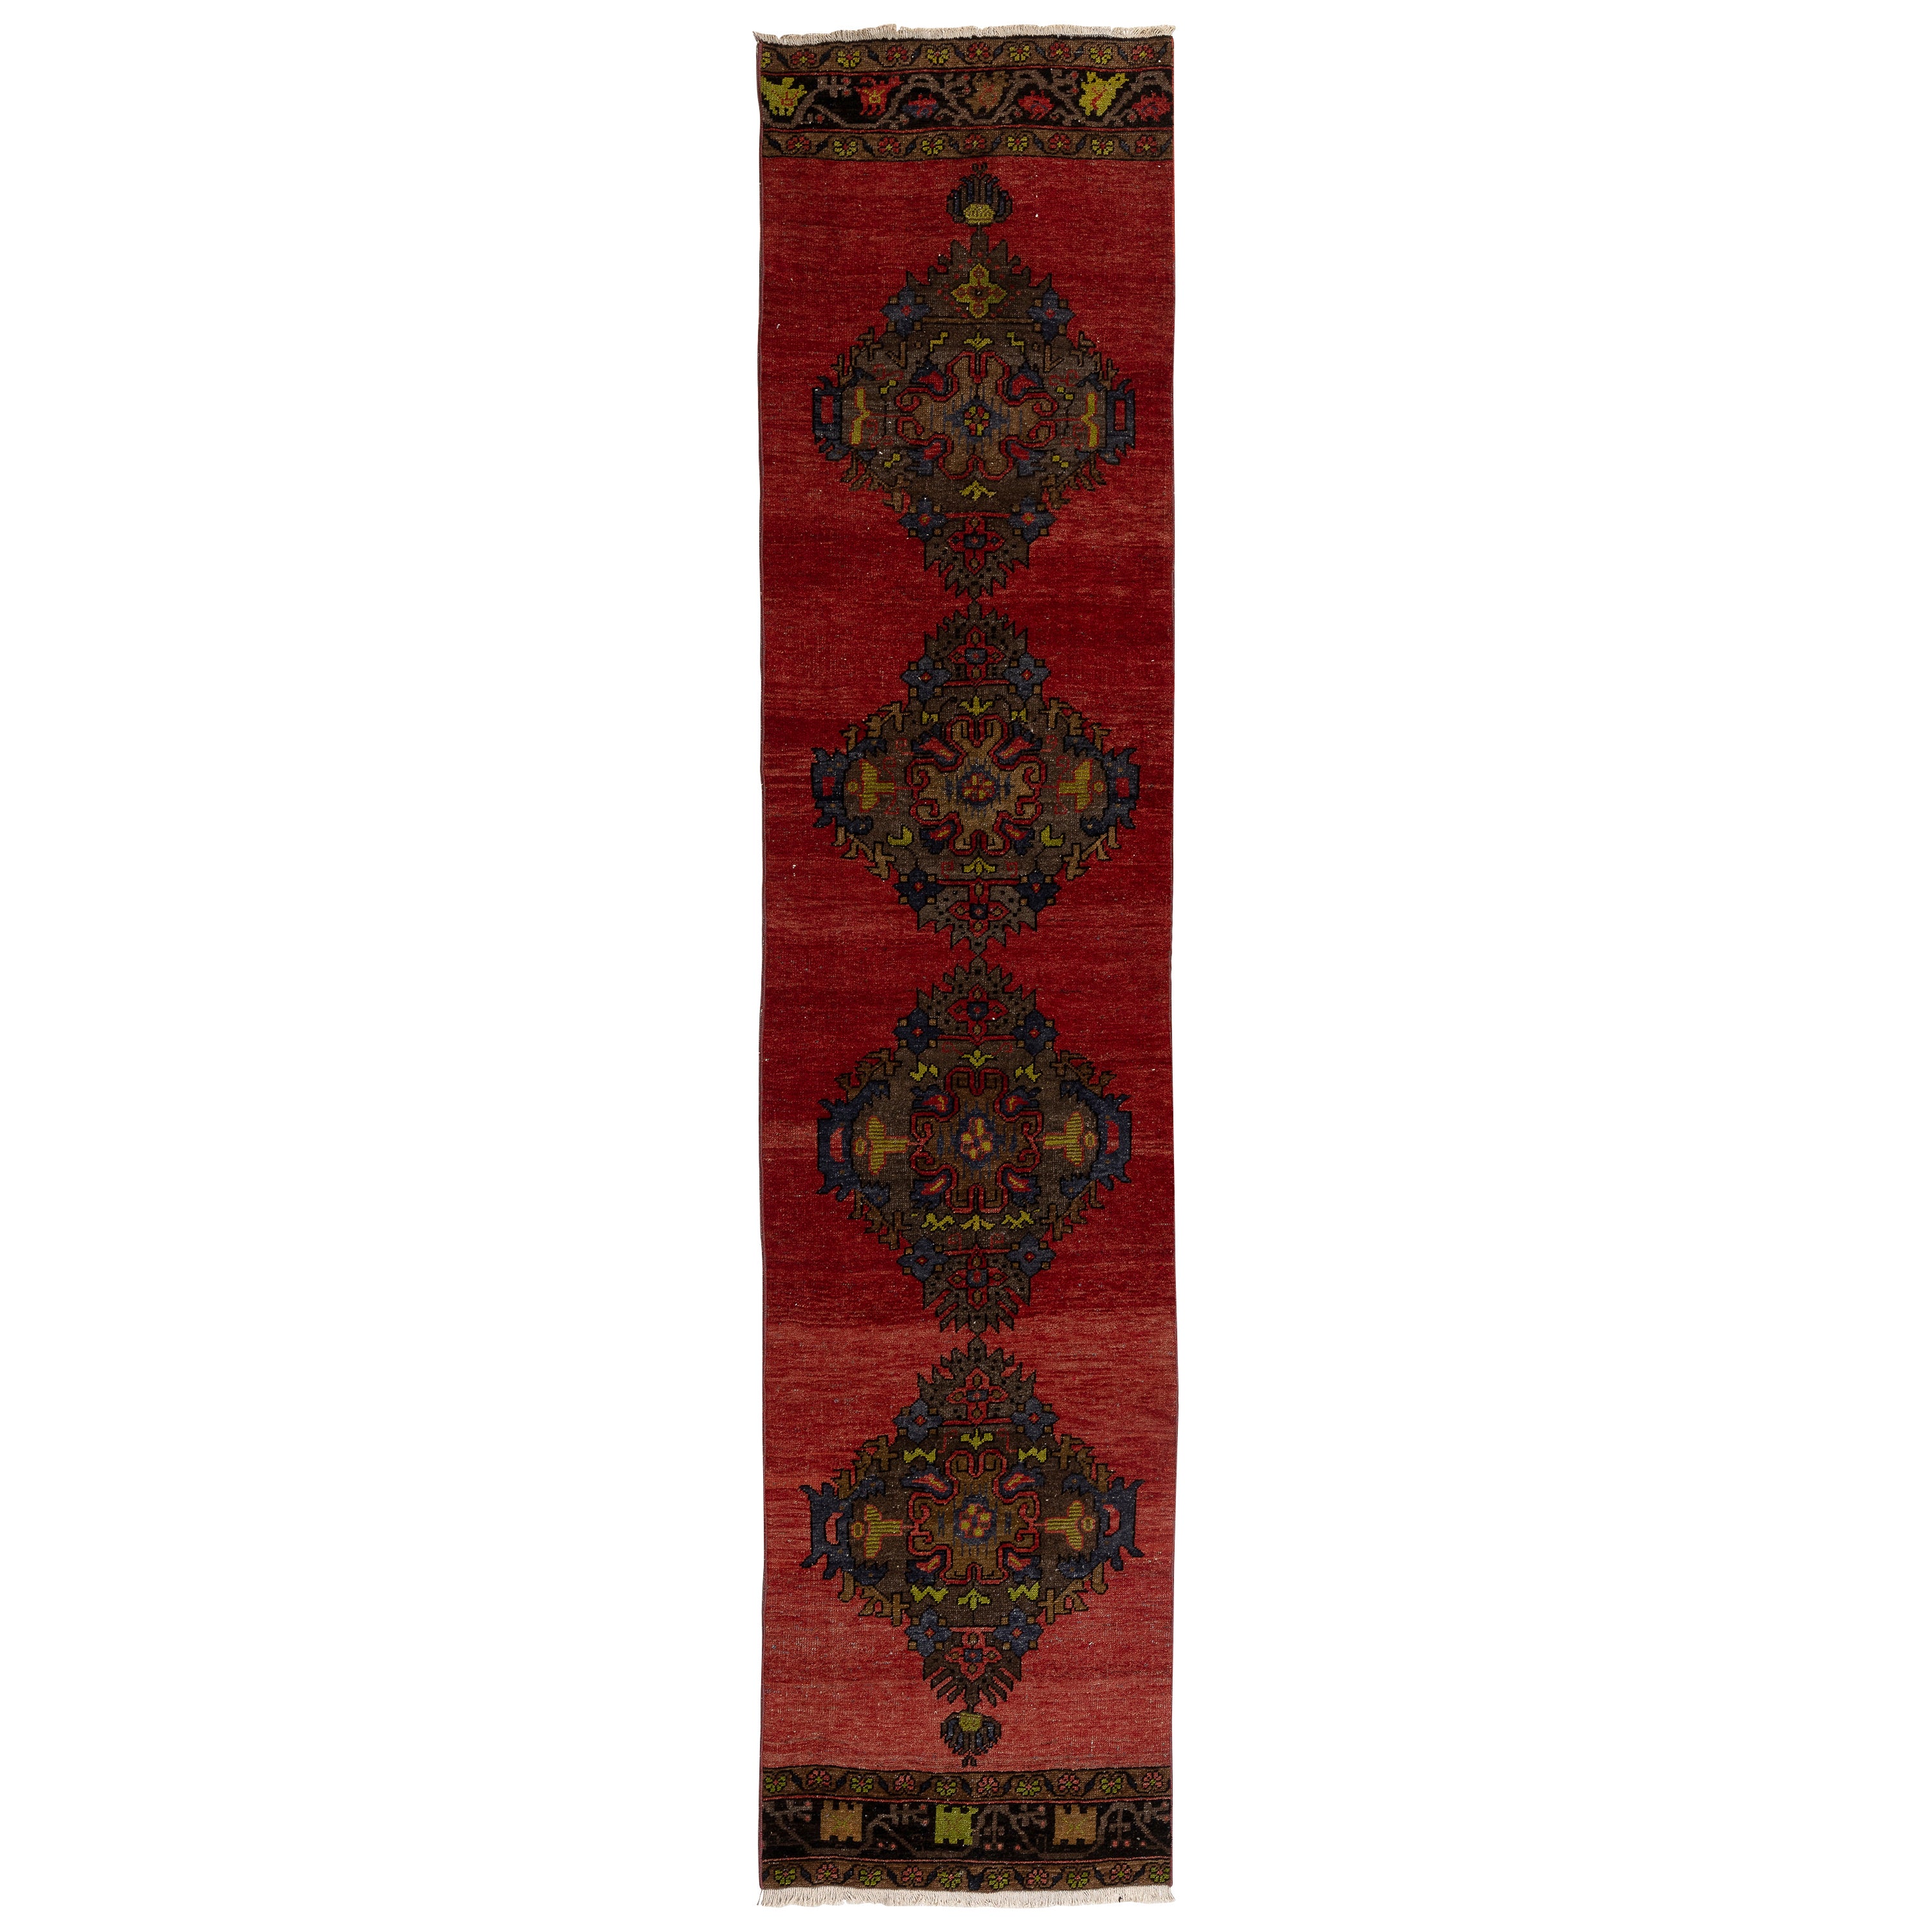 2.5x11.3 ft Vintage Handmade Turkish Tribal Style Wool Runner Rug for Hallway For Sale